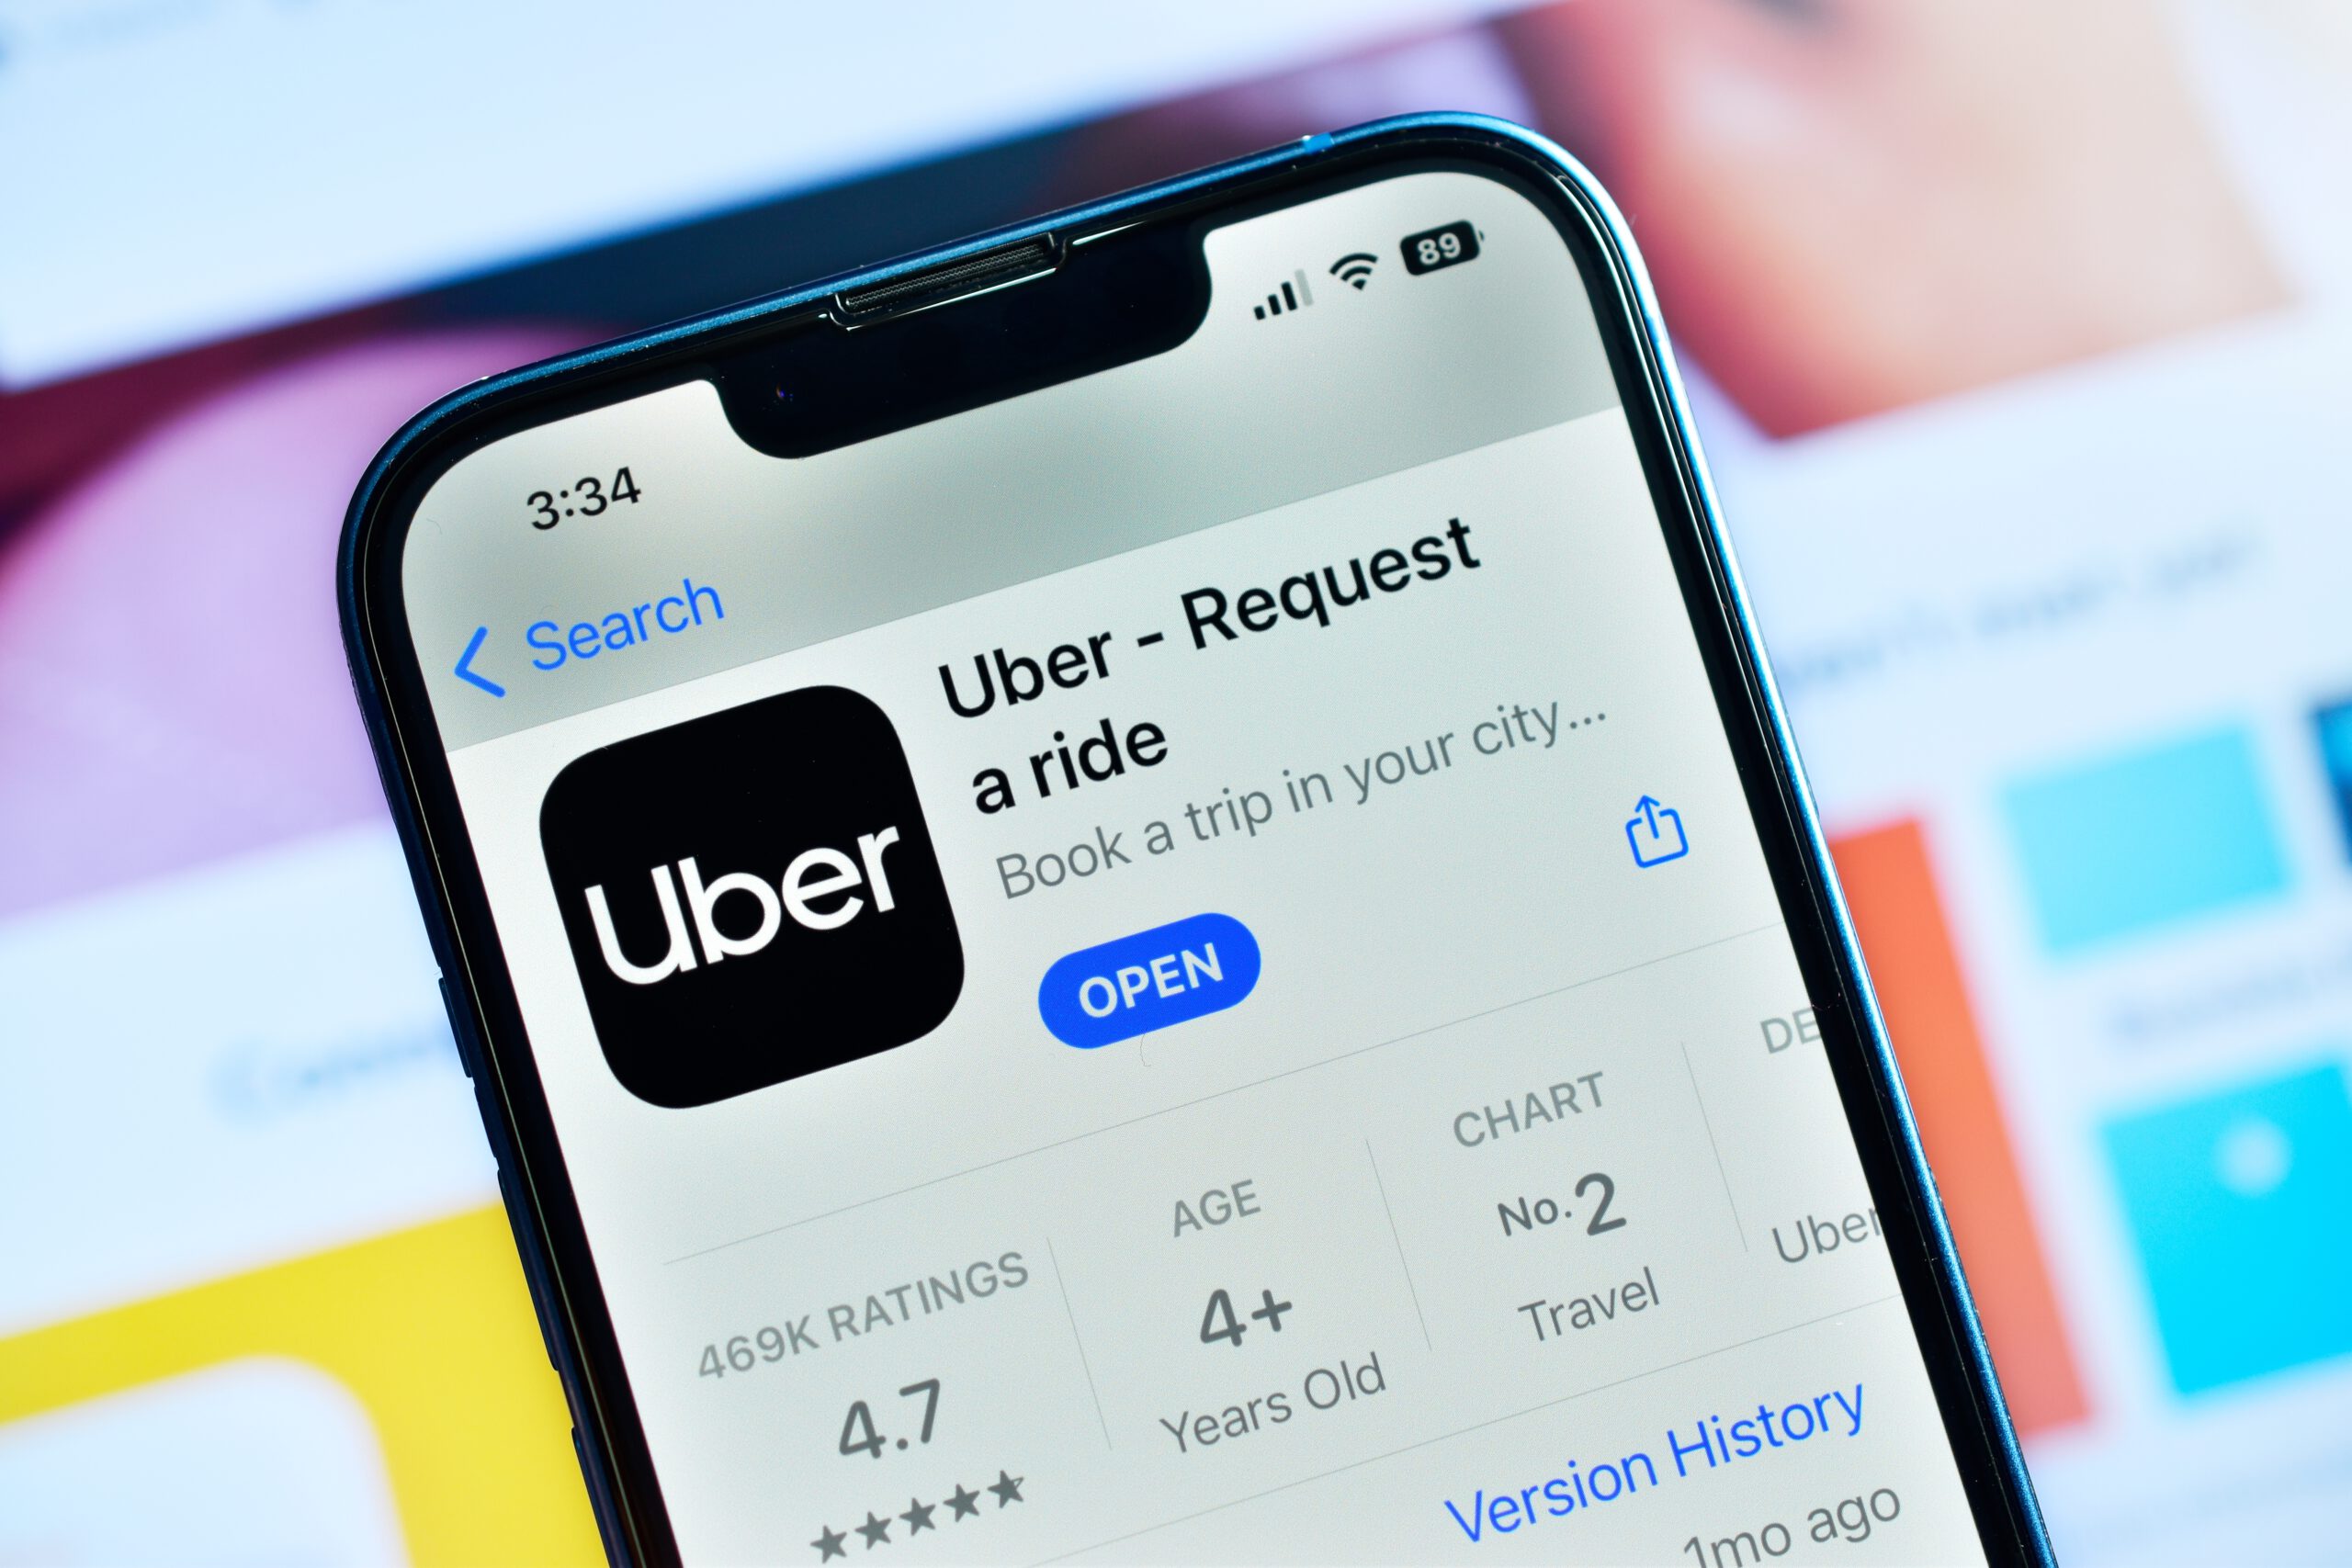 Dubai Taxi - Uber app